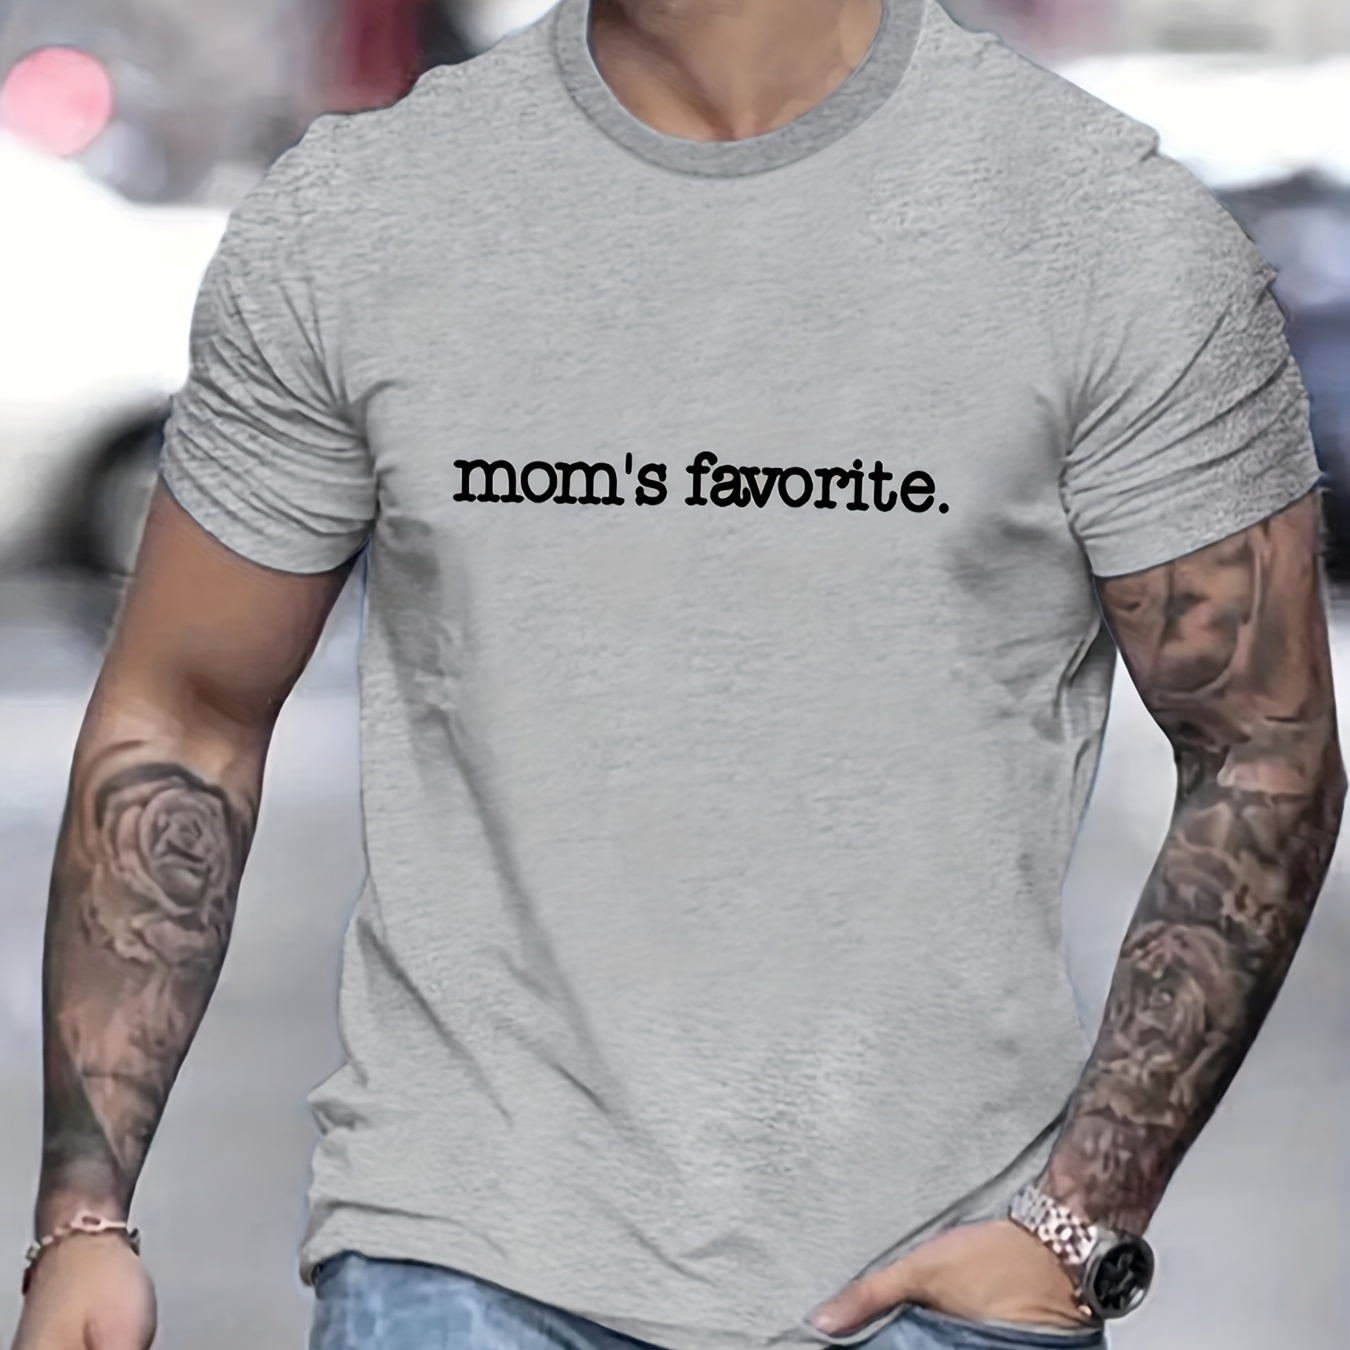 

Mom's Favorite Print T Shirt, Tees For Men, Casual Short Sleeve T-shirt For Summer